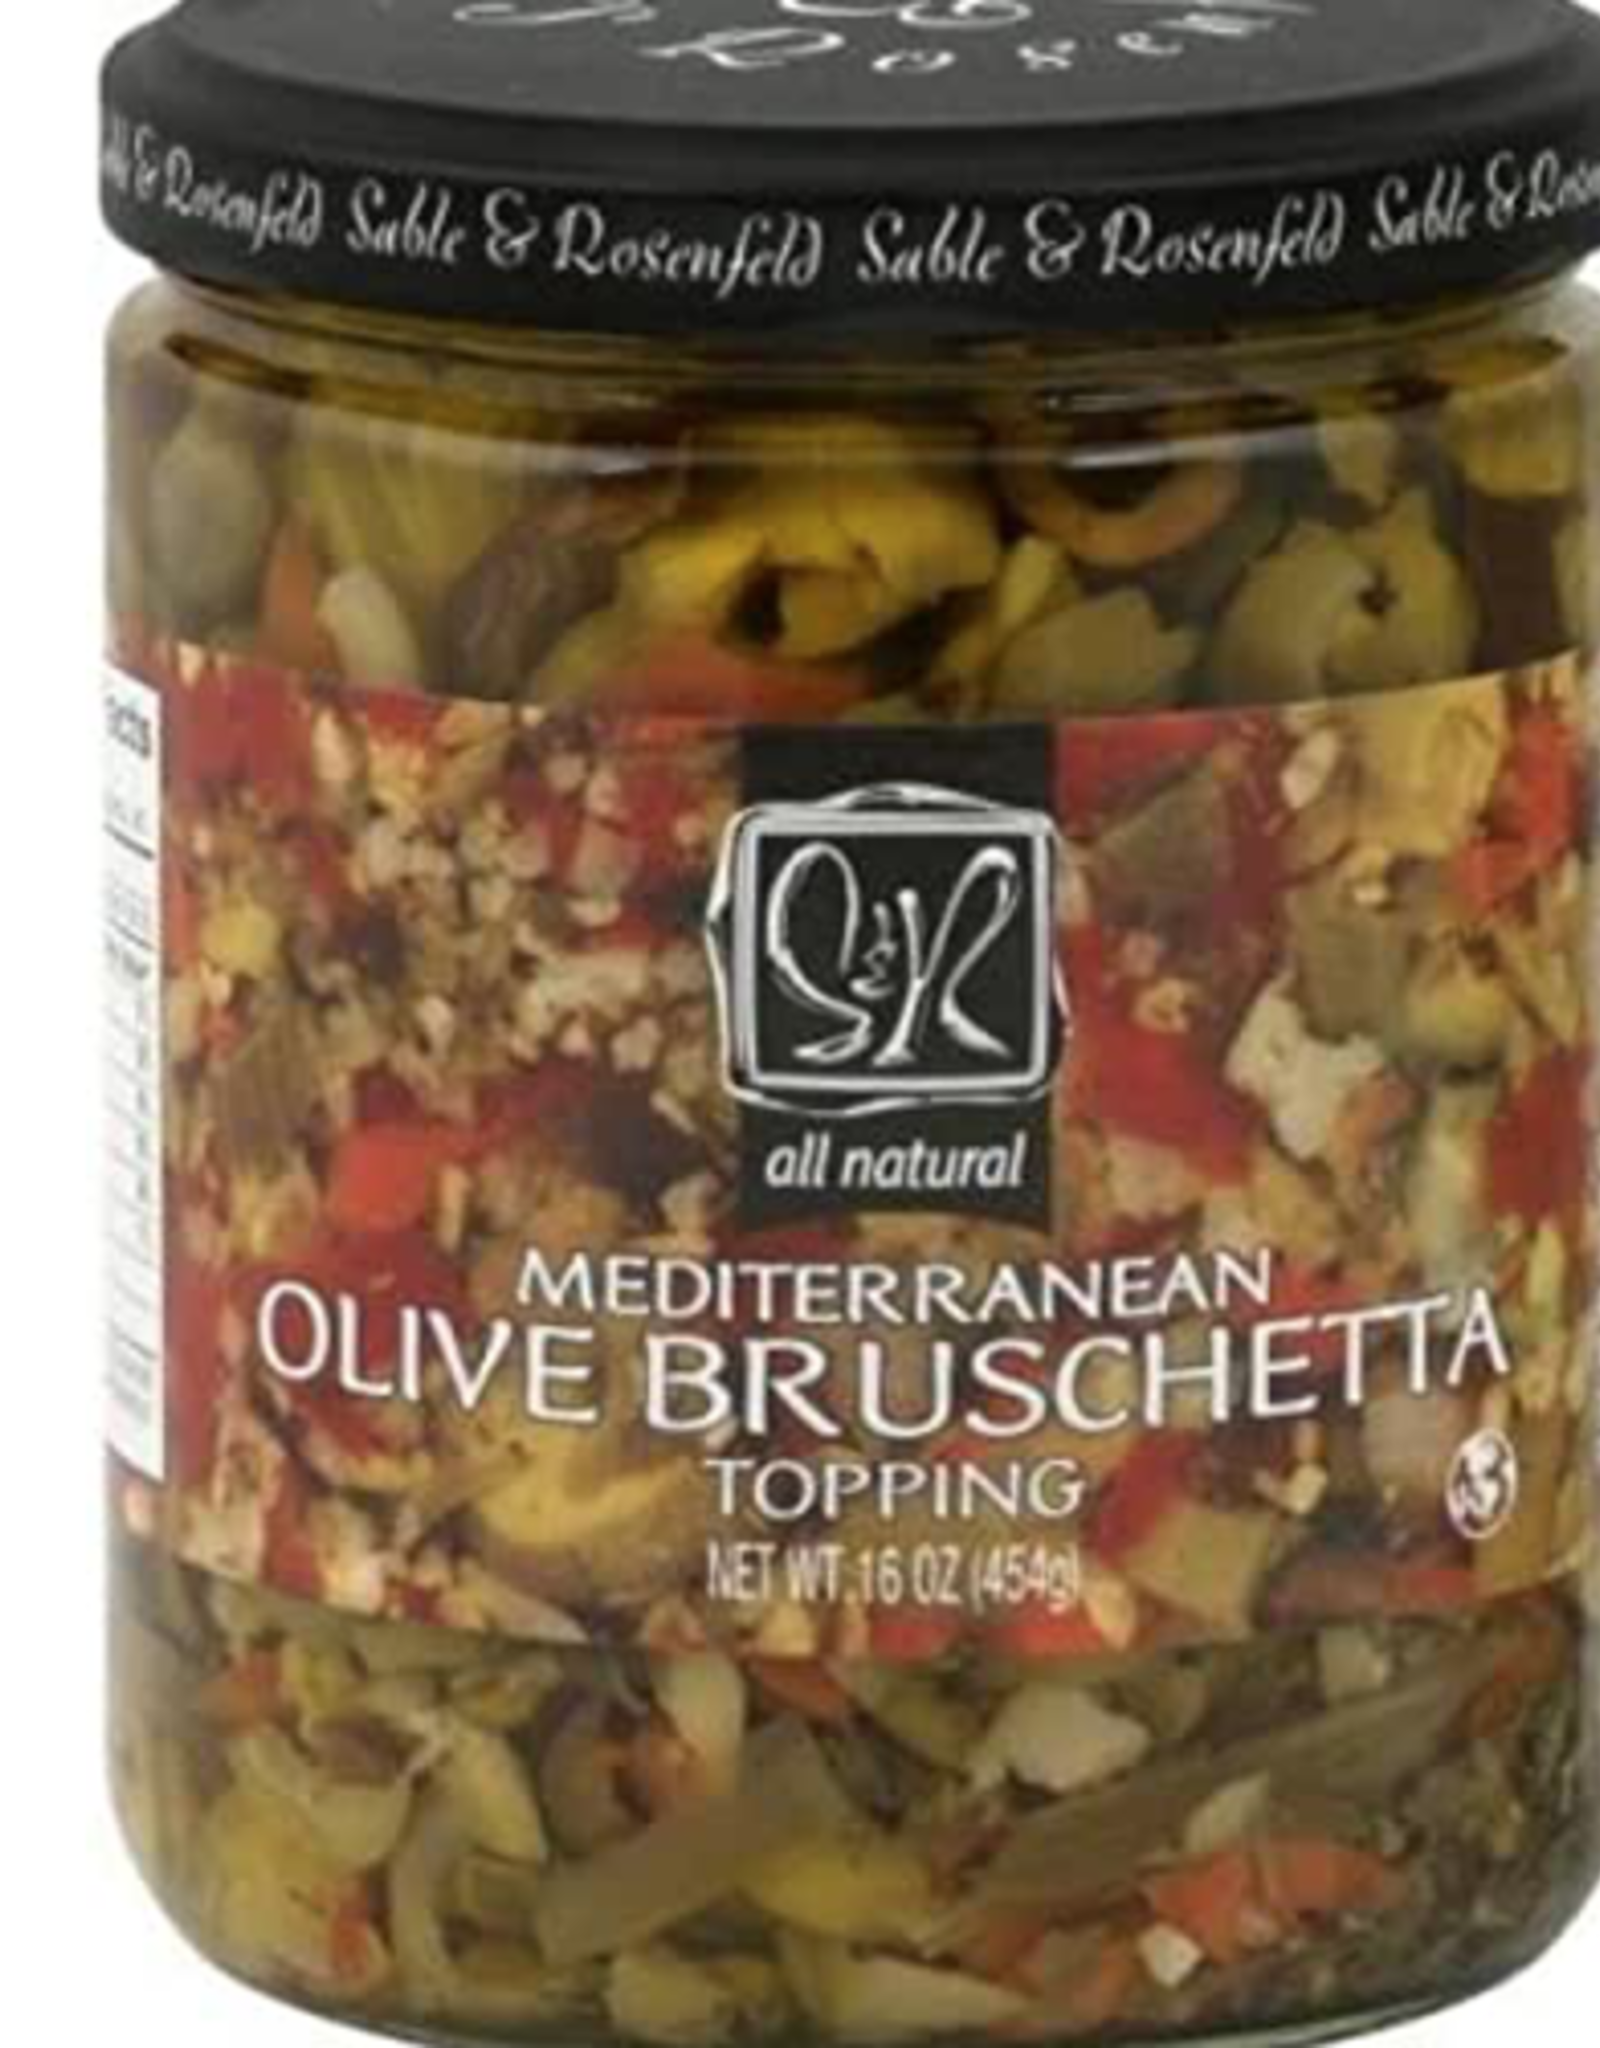 Sable & Rosenfeld Mediterranean Olive Bruschetta 16 oz